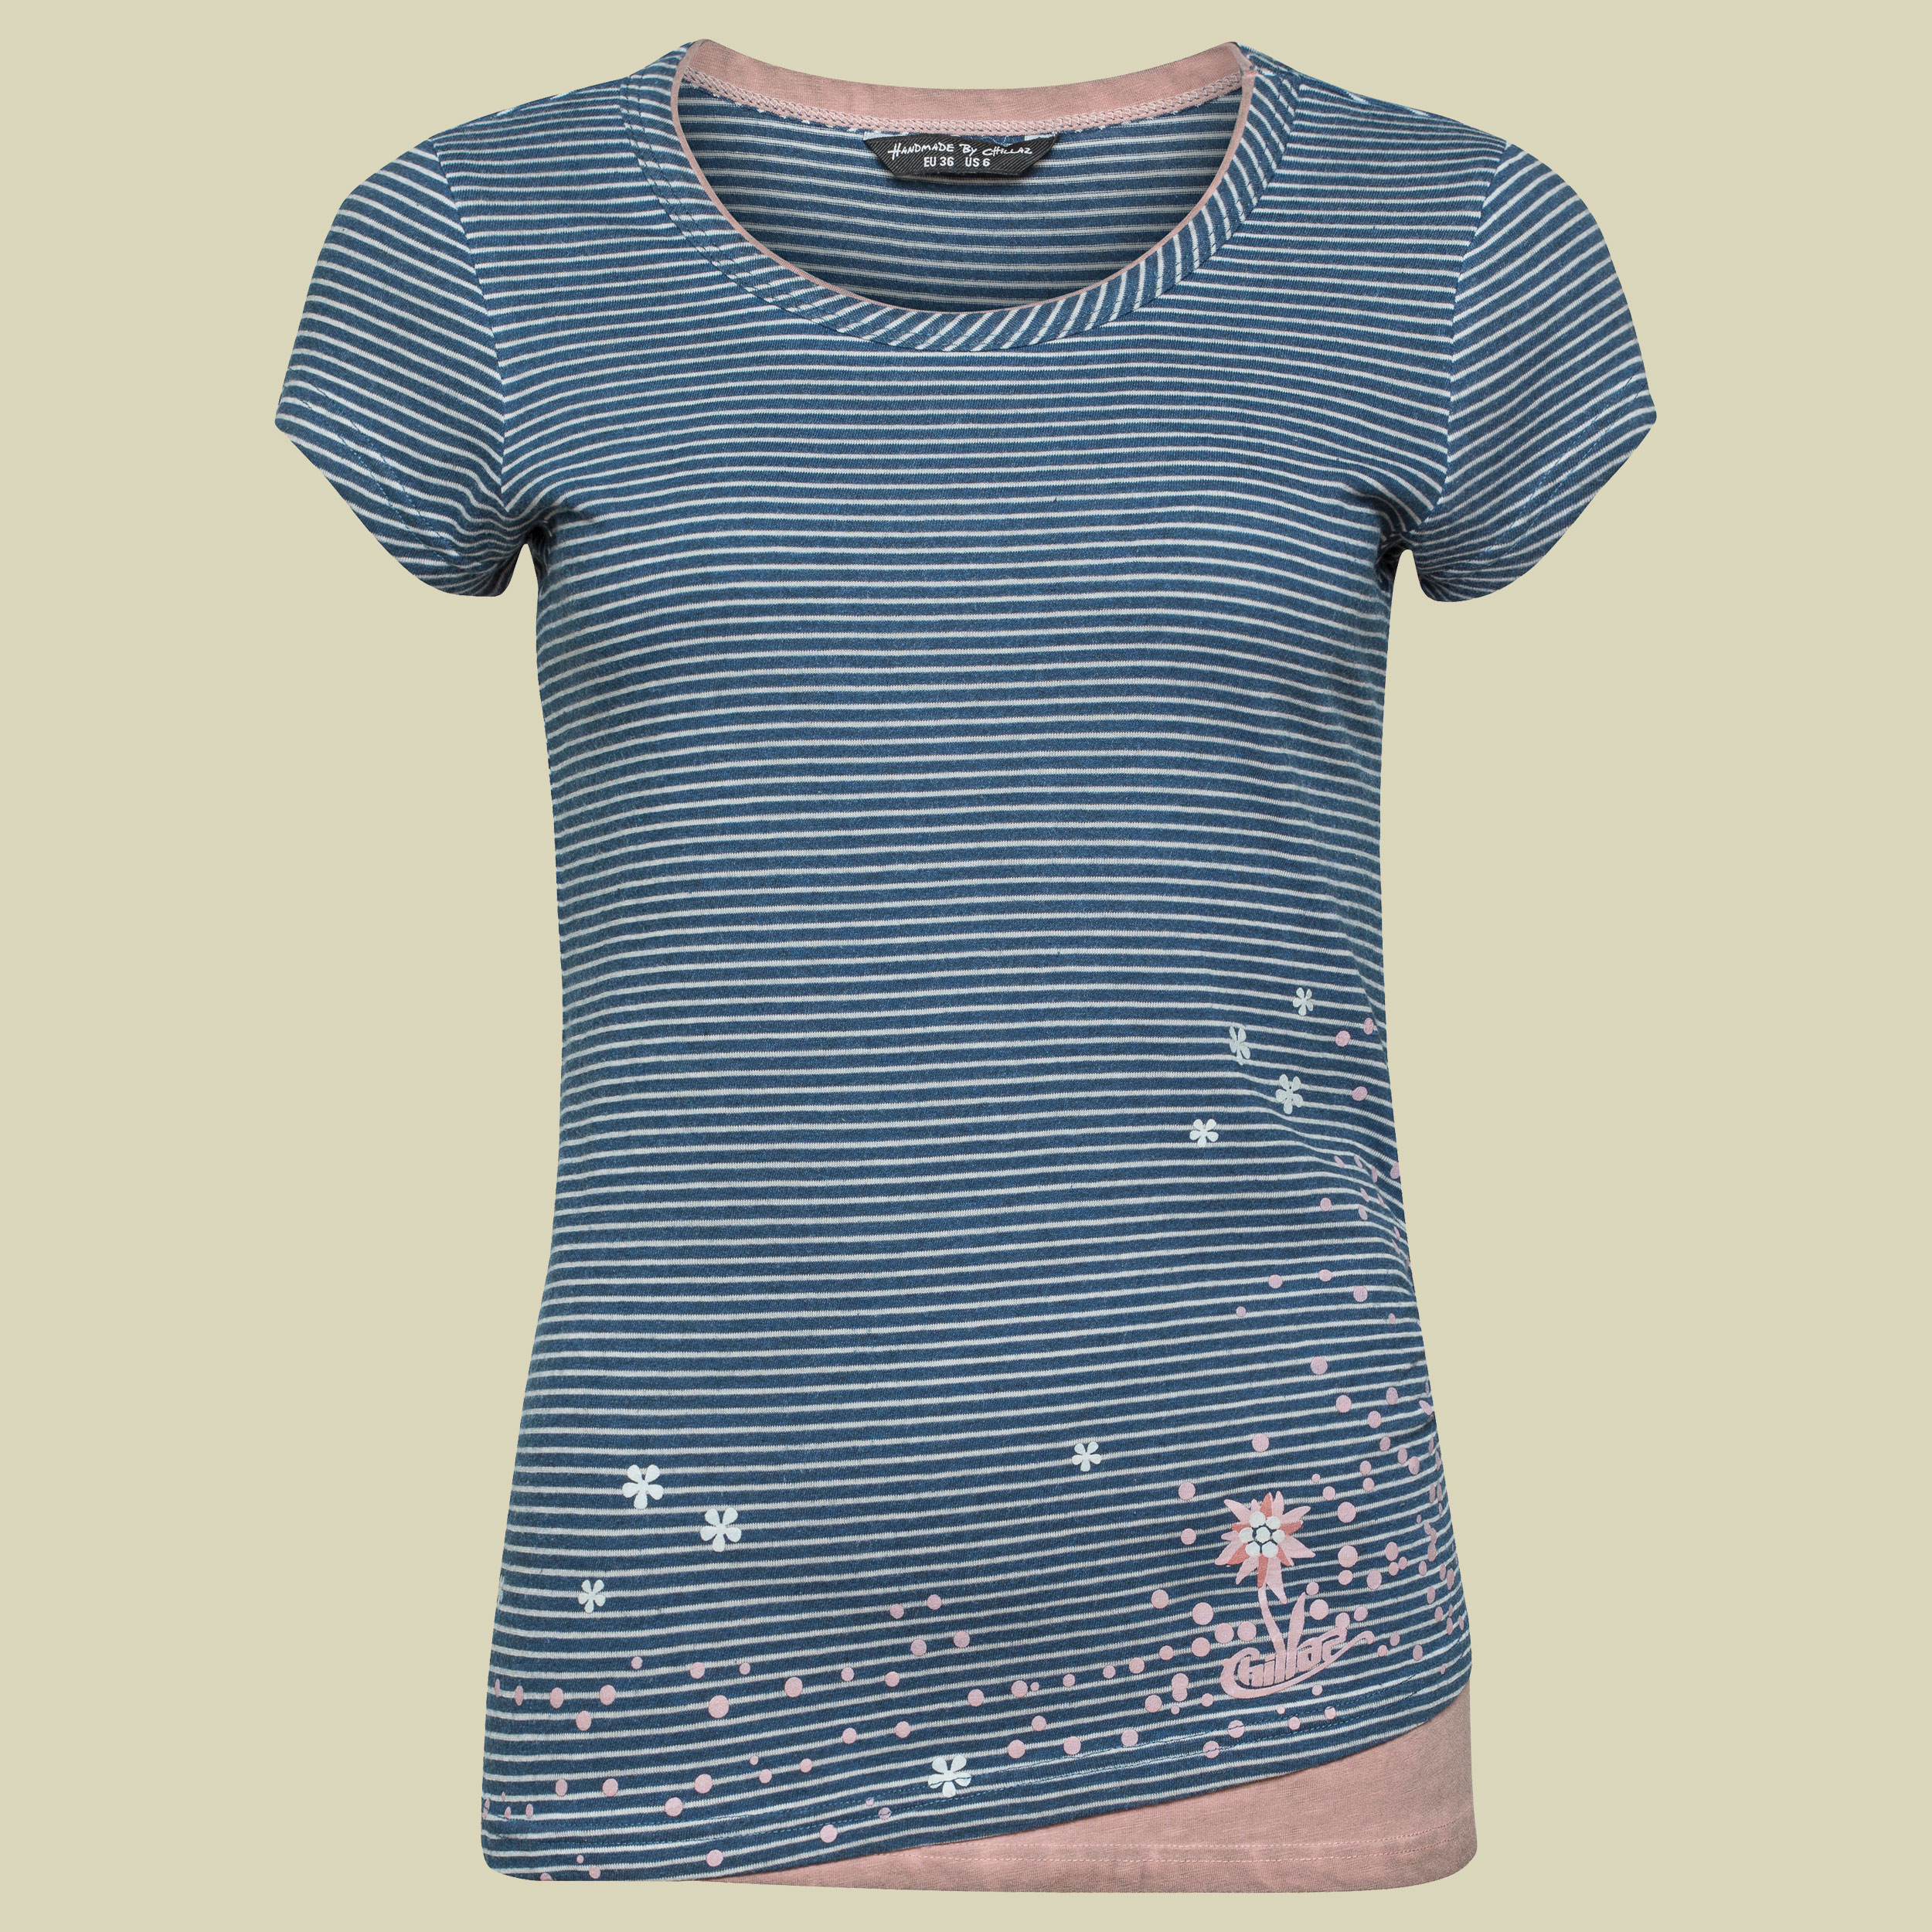 Fancy Little Dot T-Shirt Women Größe 42 Farbe indigo blue stripes washed